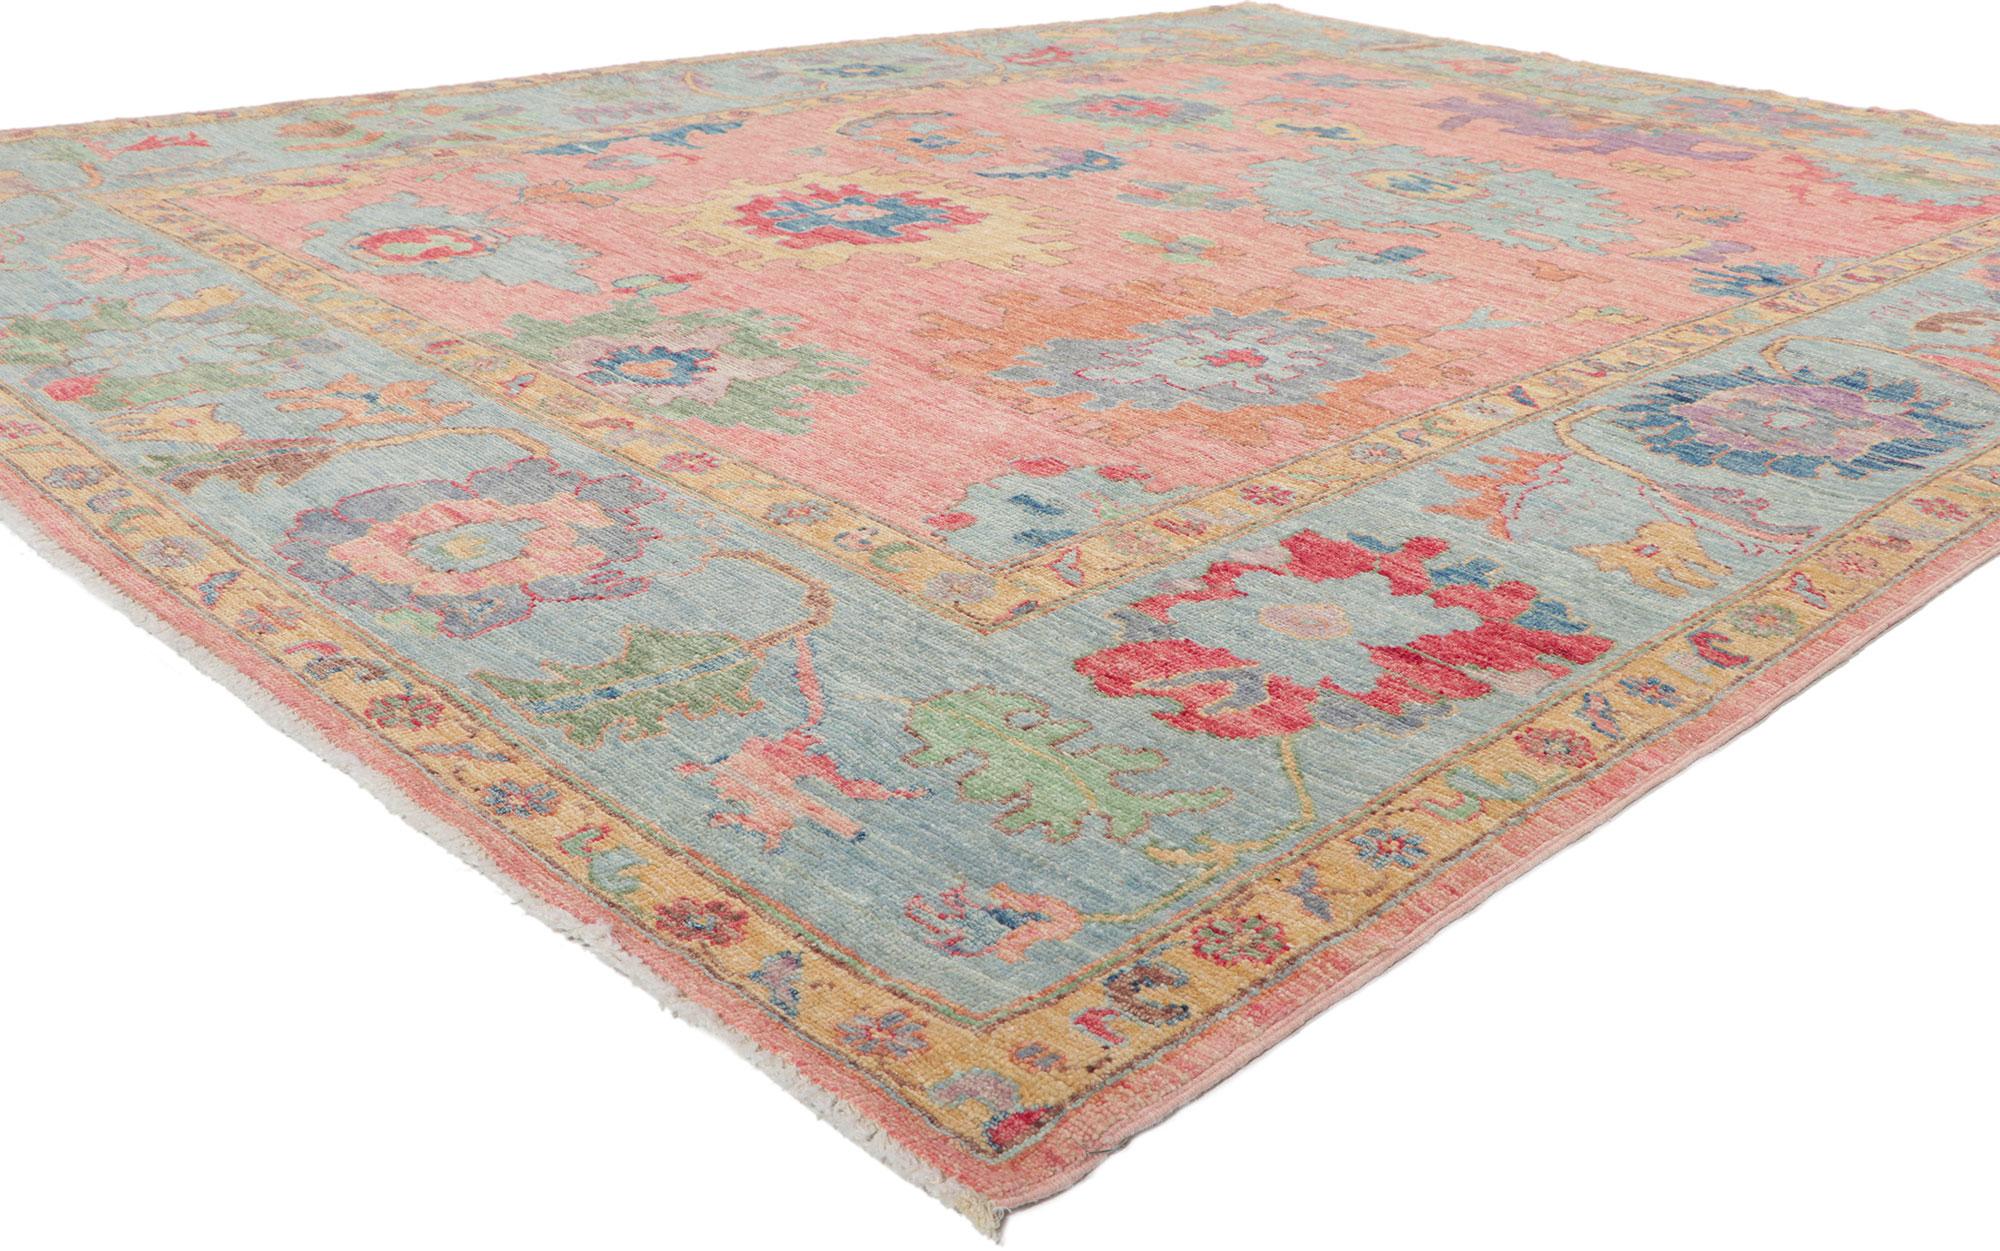 80959 New Contemporary Oushak rug, 07'11 x 10'01.